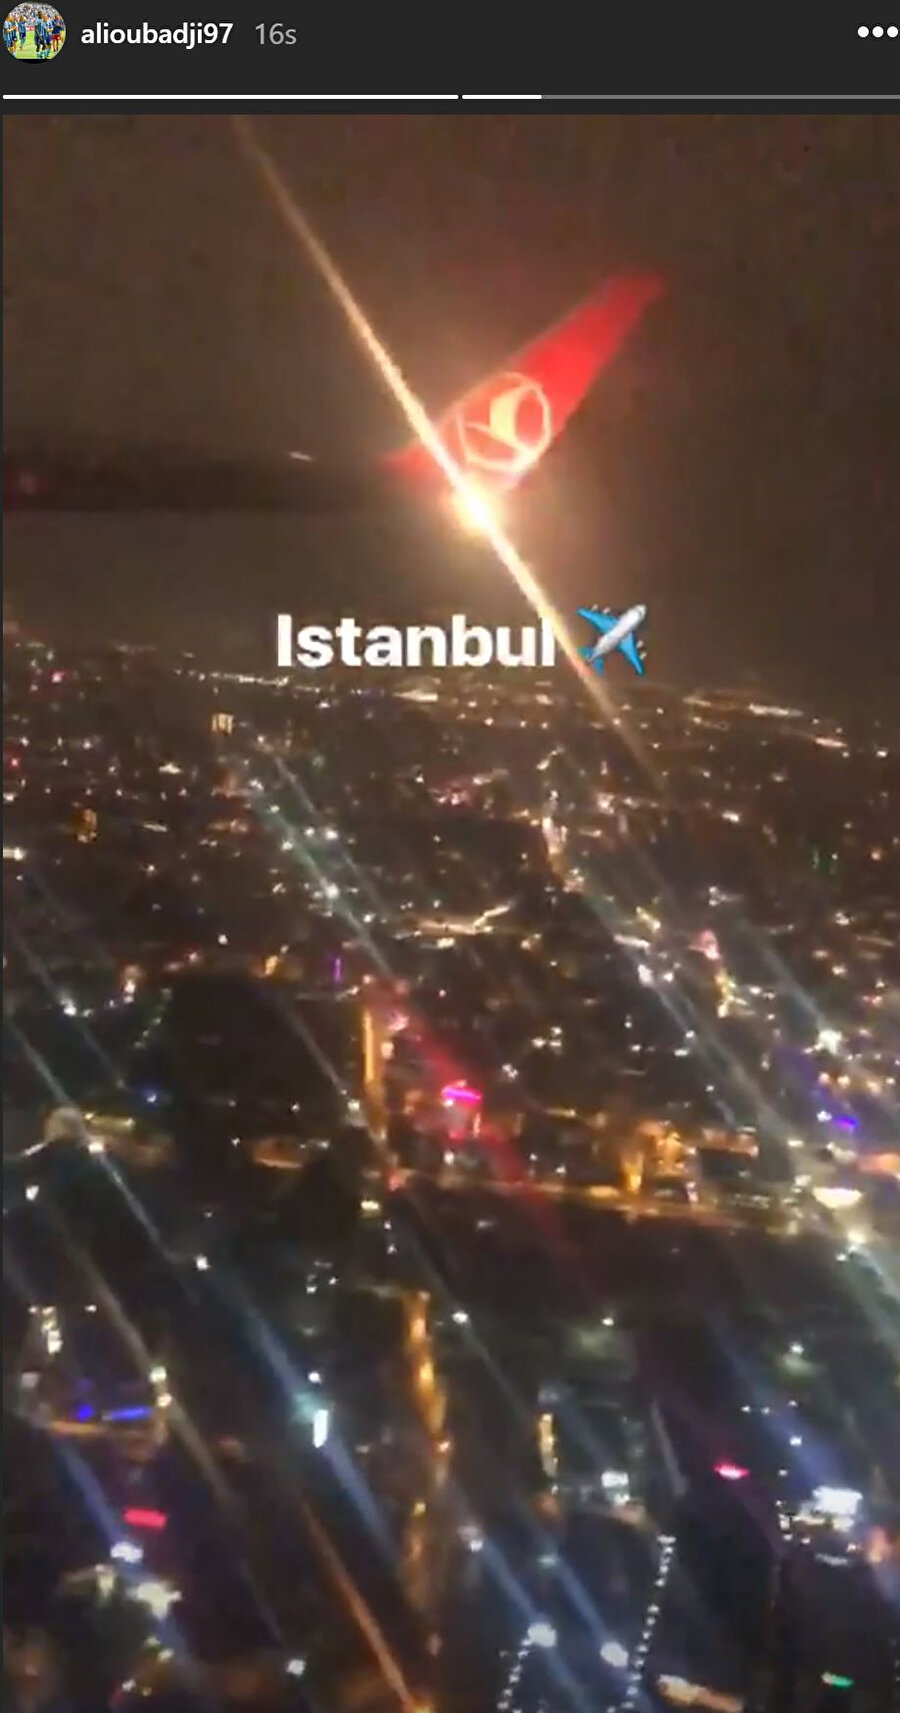 Badji'nin İstanbul paylaşımı.